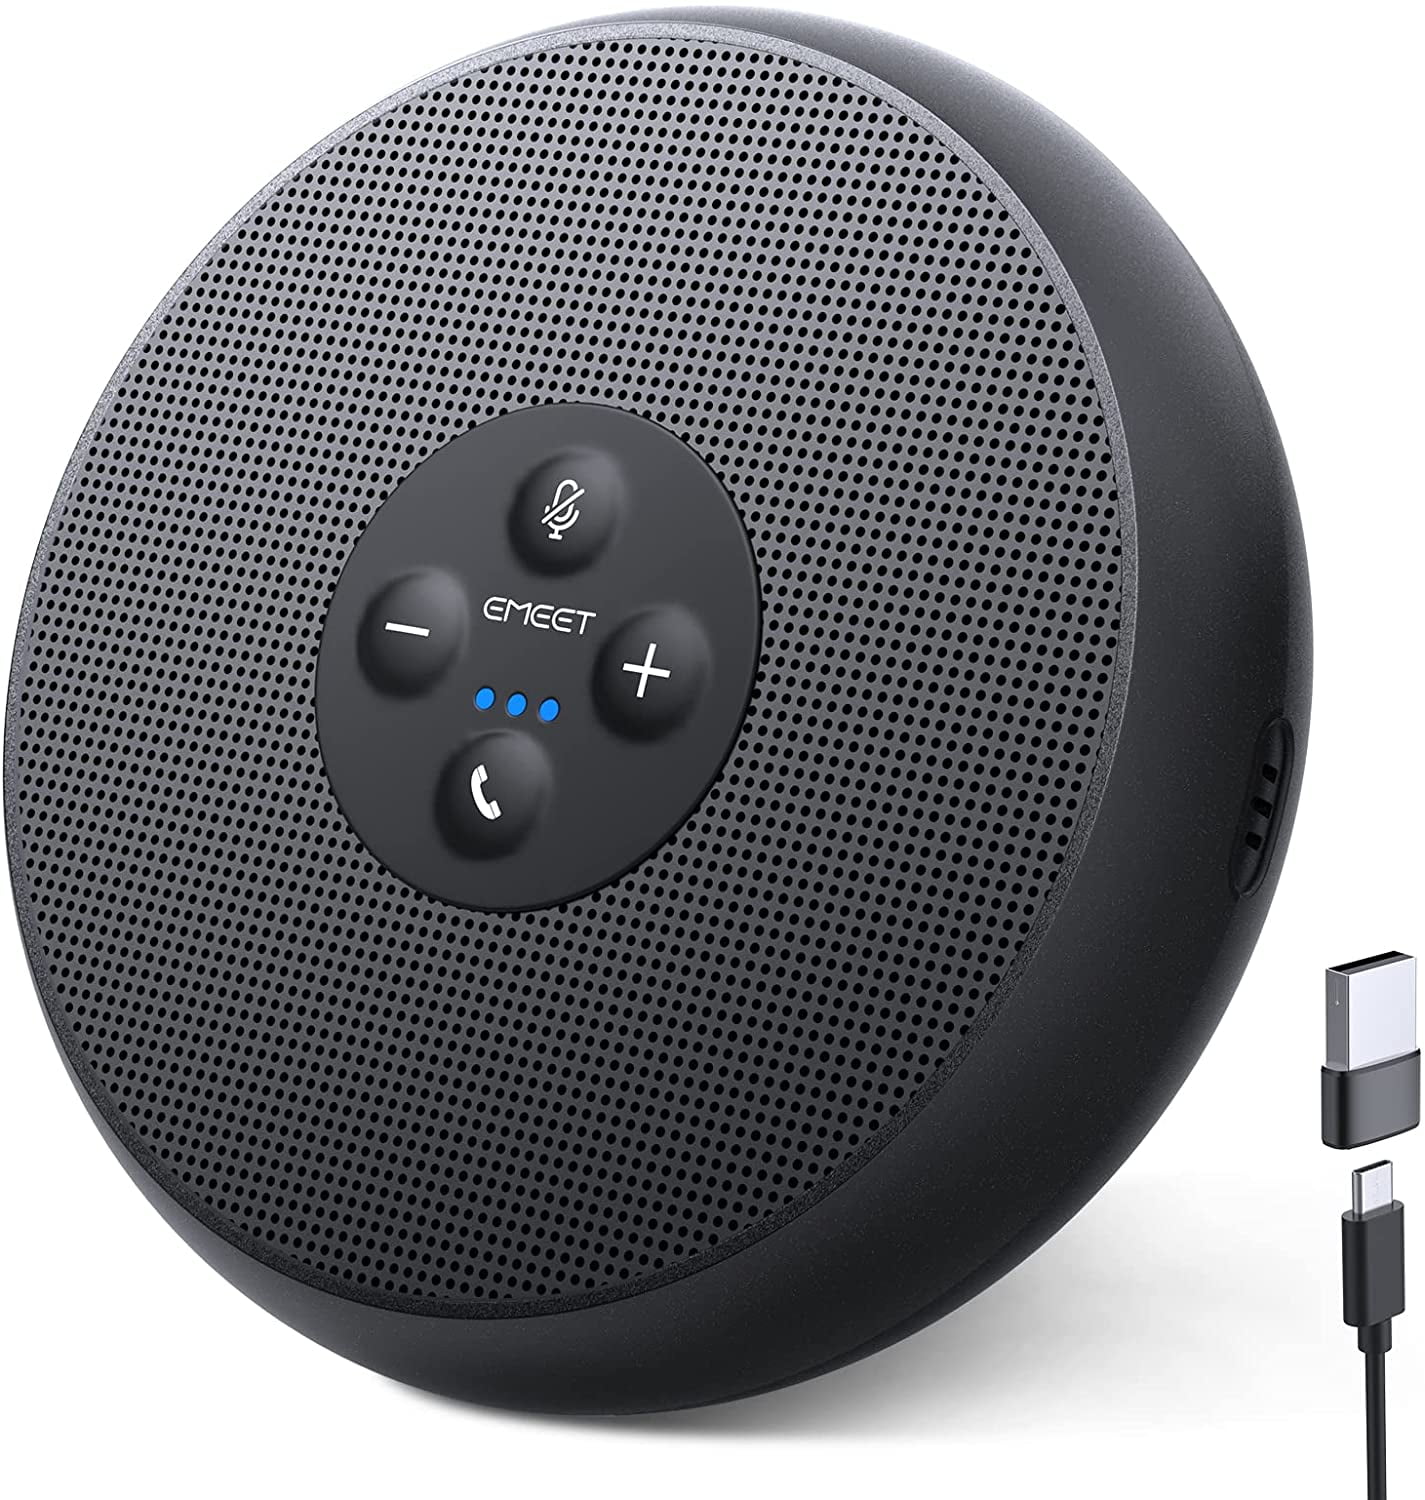 Conference Speakerphone/bluetooth speaker EMEET M1A USB Speaker  W/Microphones Noise Reduction